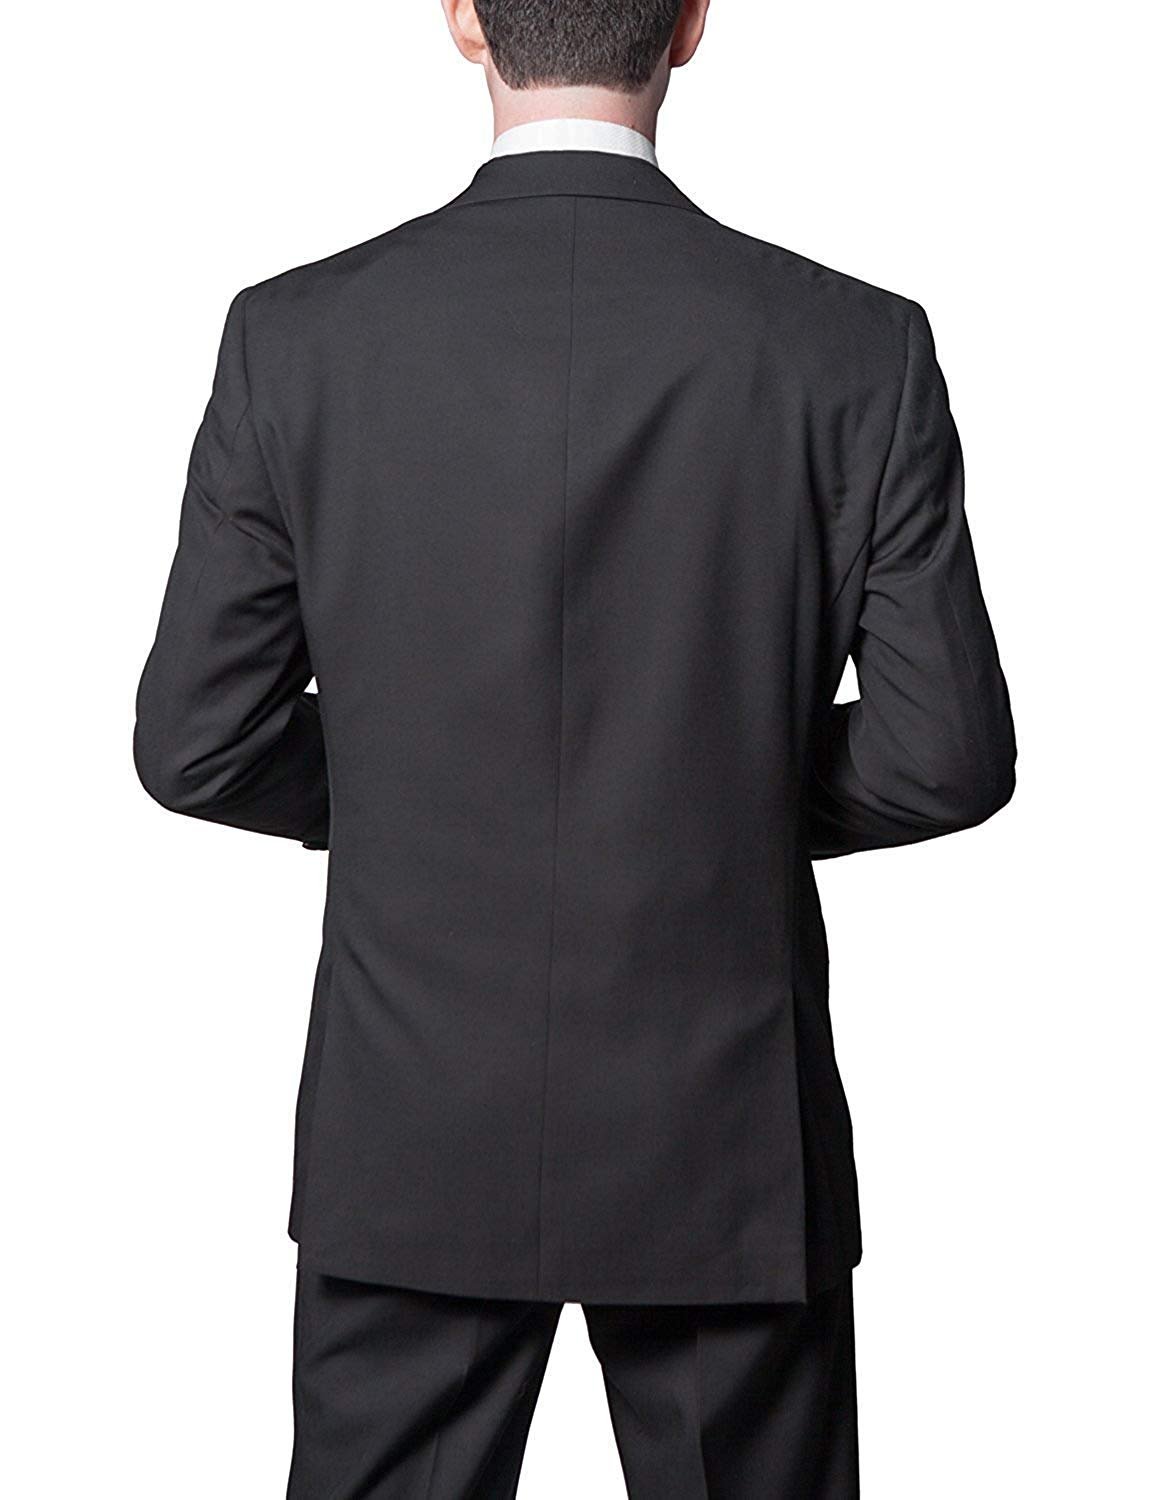 Giorgio Fiorelli Men’s G47815/1 One Button Modern Fit Two-Piece Peak Lapel Tuxedo Suit Set - Black - 40S - image 2 of 2